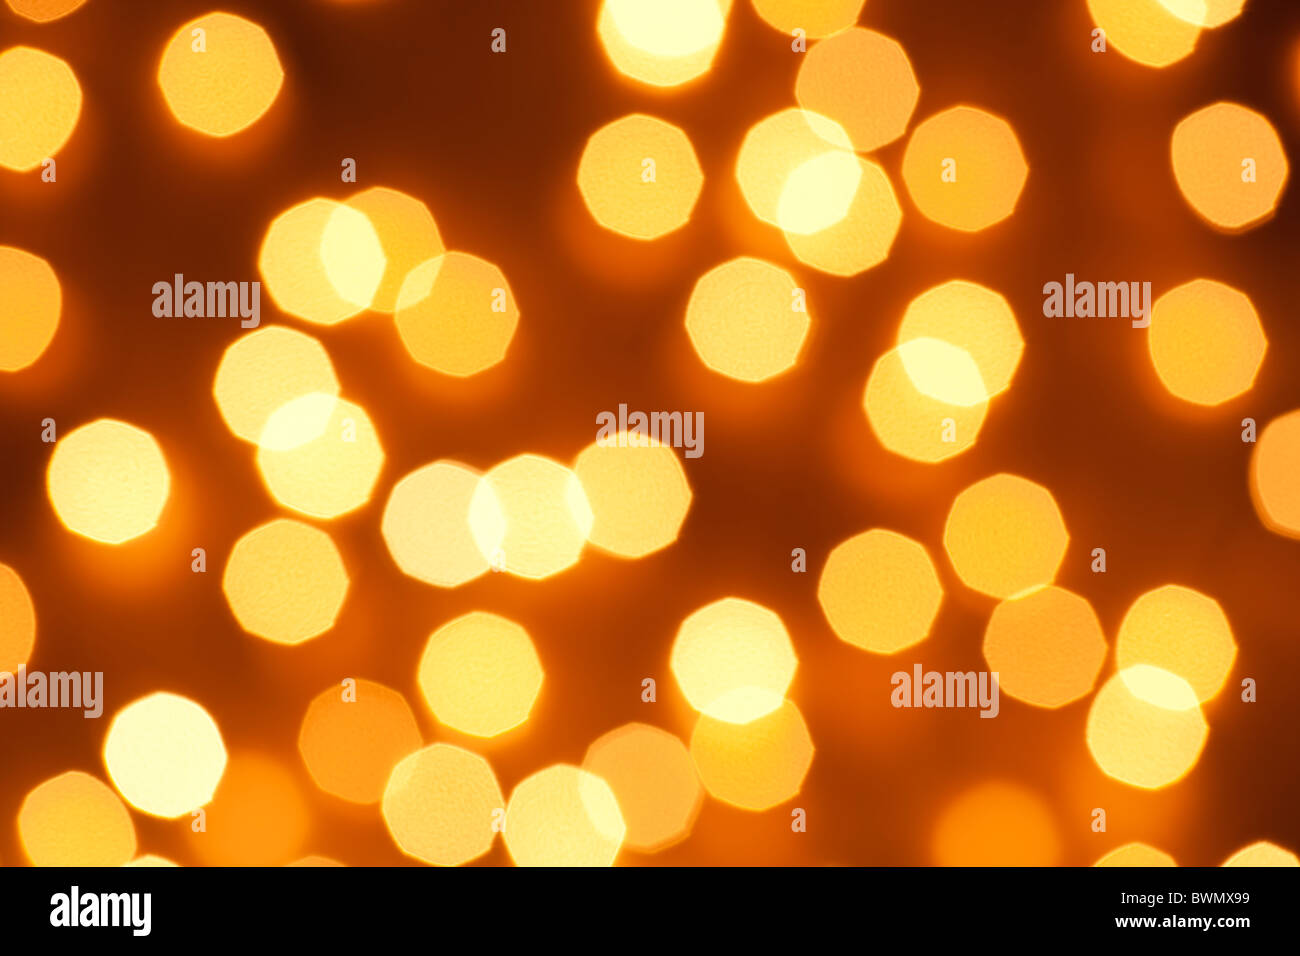 Blurred lights background. Yellow, orange and white spots. aRGB. Stock Photo